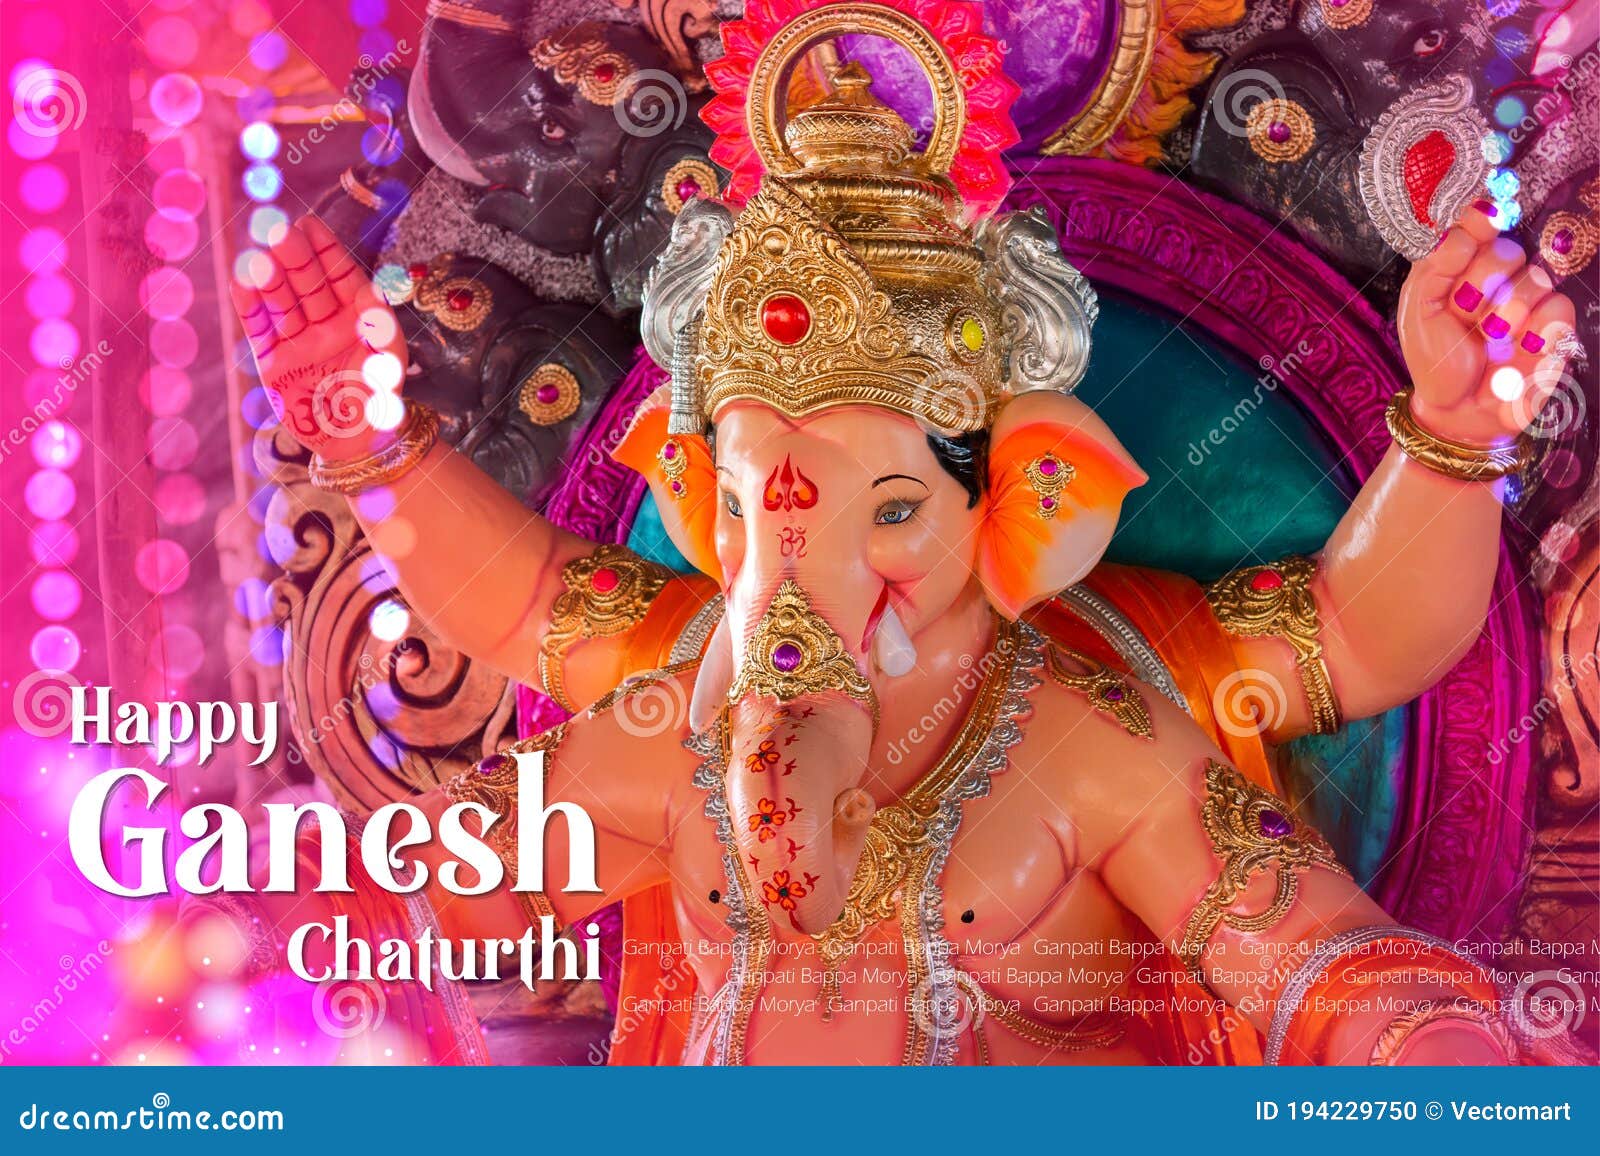 Lord Ganpati Idol for Happy Ganesh Chaturthi Festival of India ...